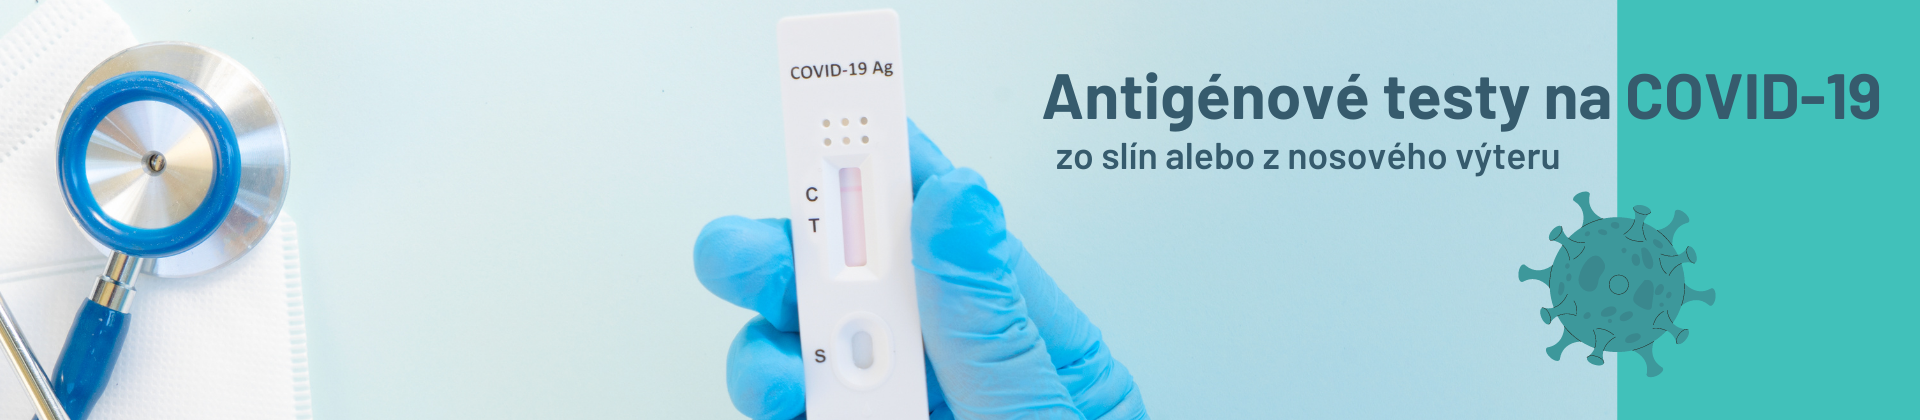 Antigénove testy na Covid-19